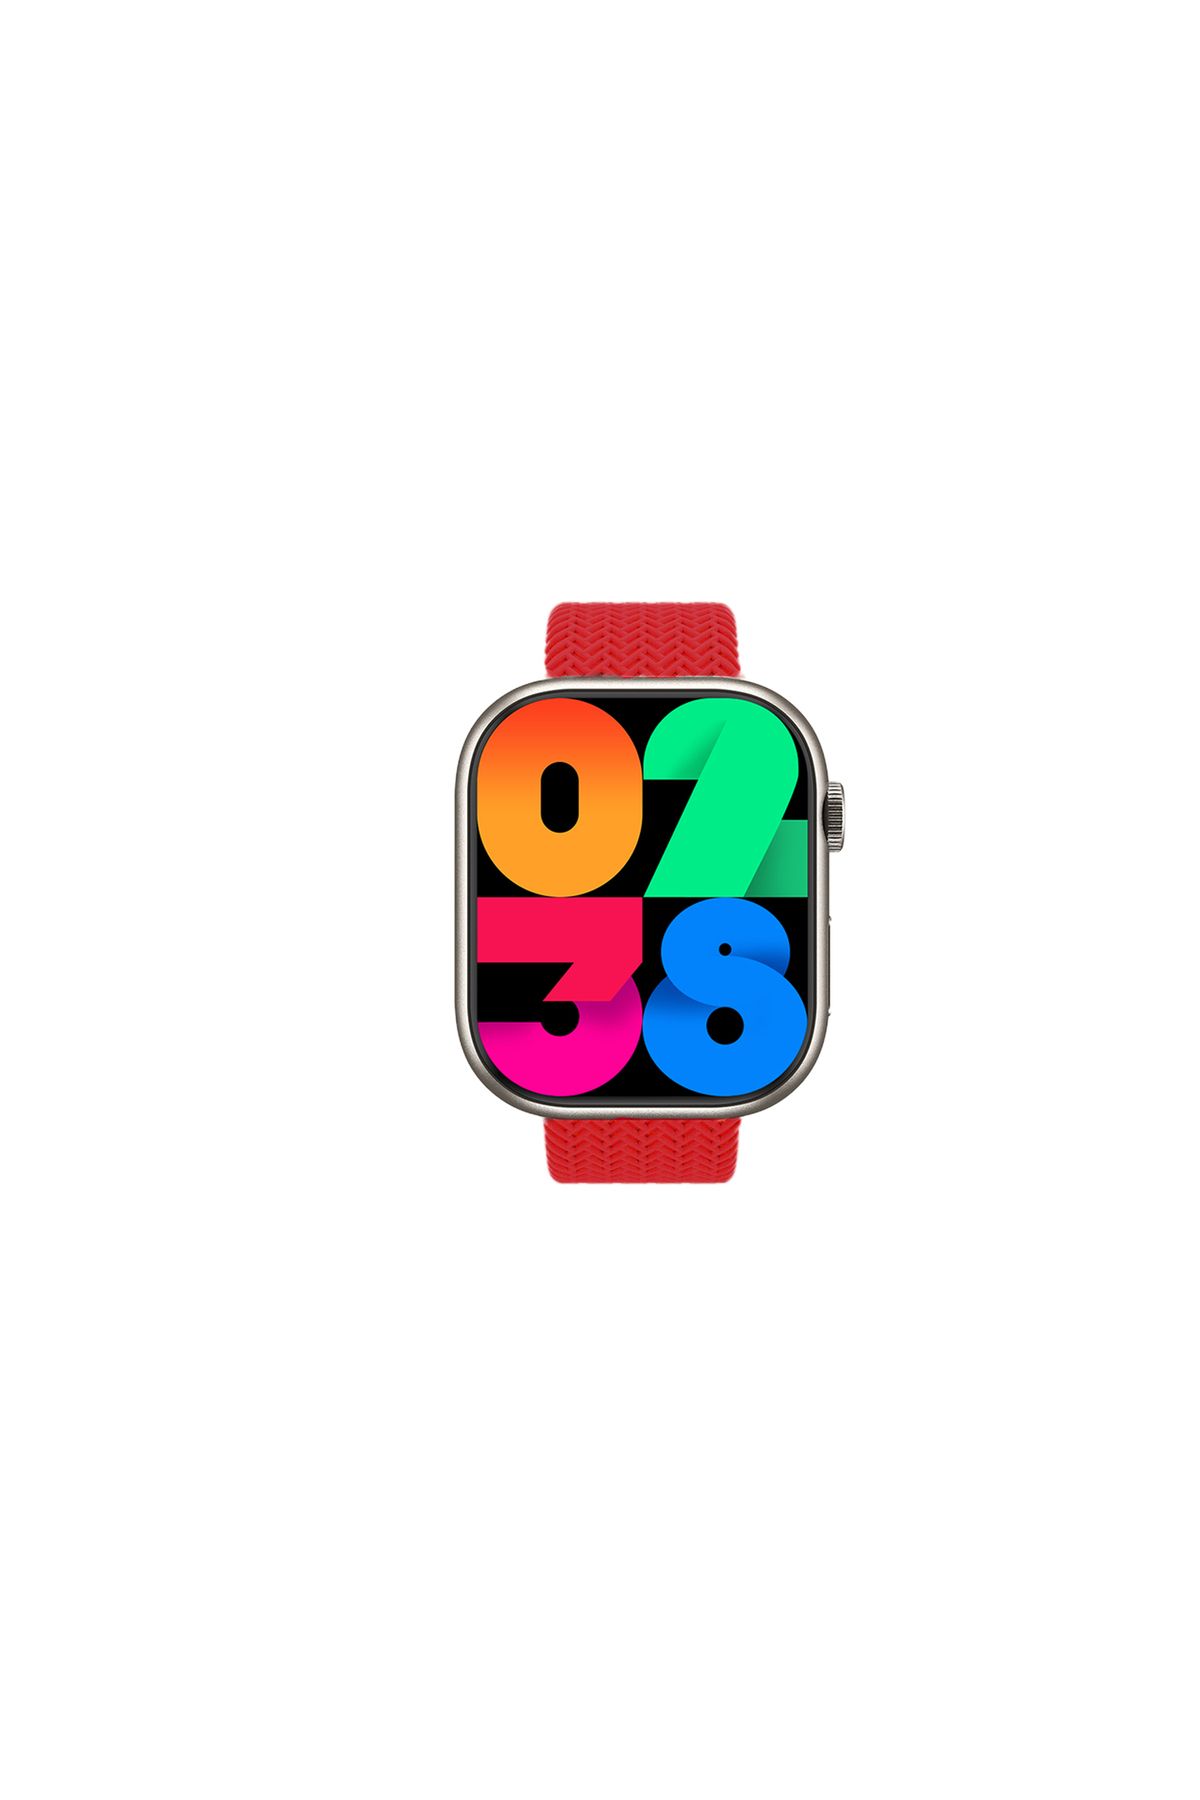 Global 2023 Watch 9 Pro Amoled Ekran Android İos Uyumlu Akıllı Saat Kırmızı WNE0927